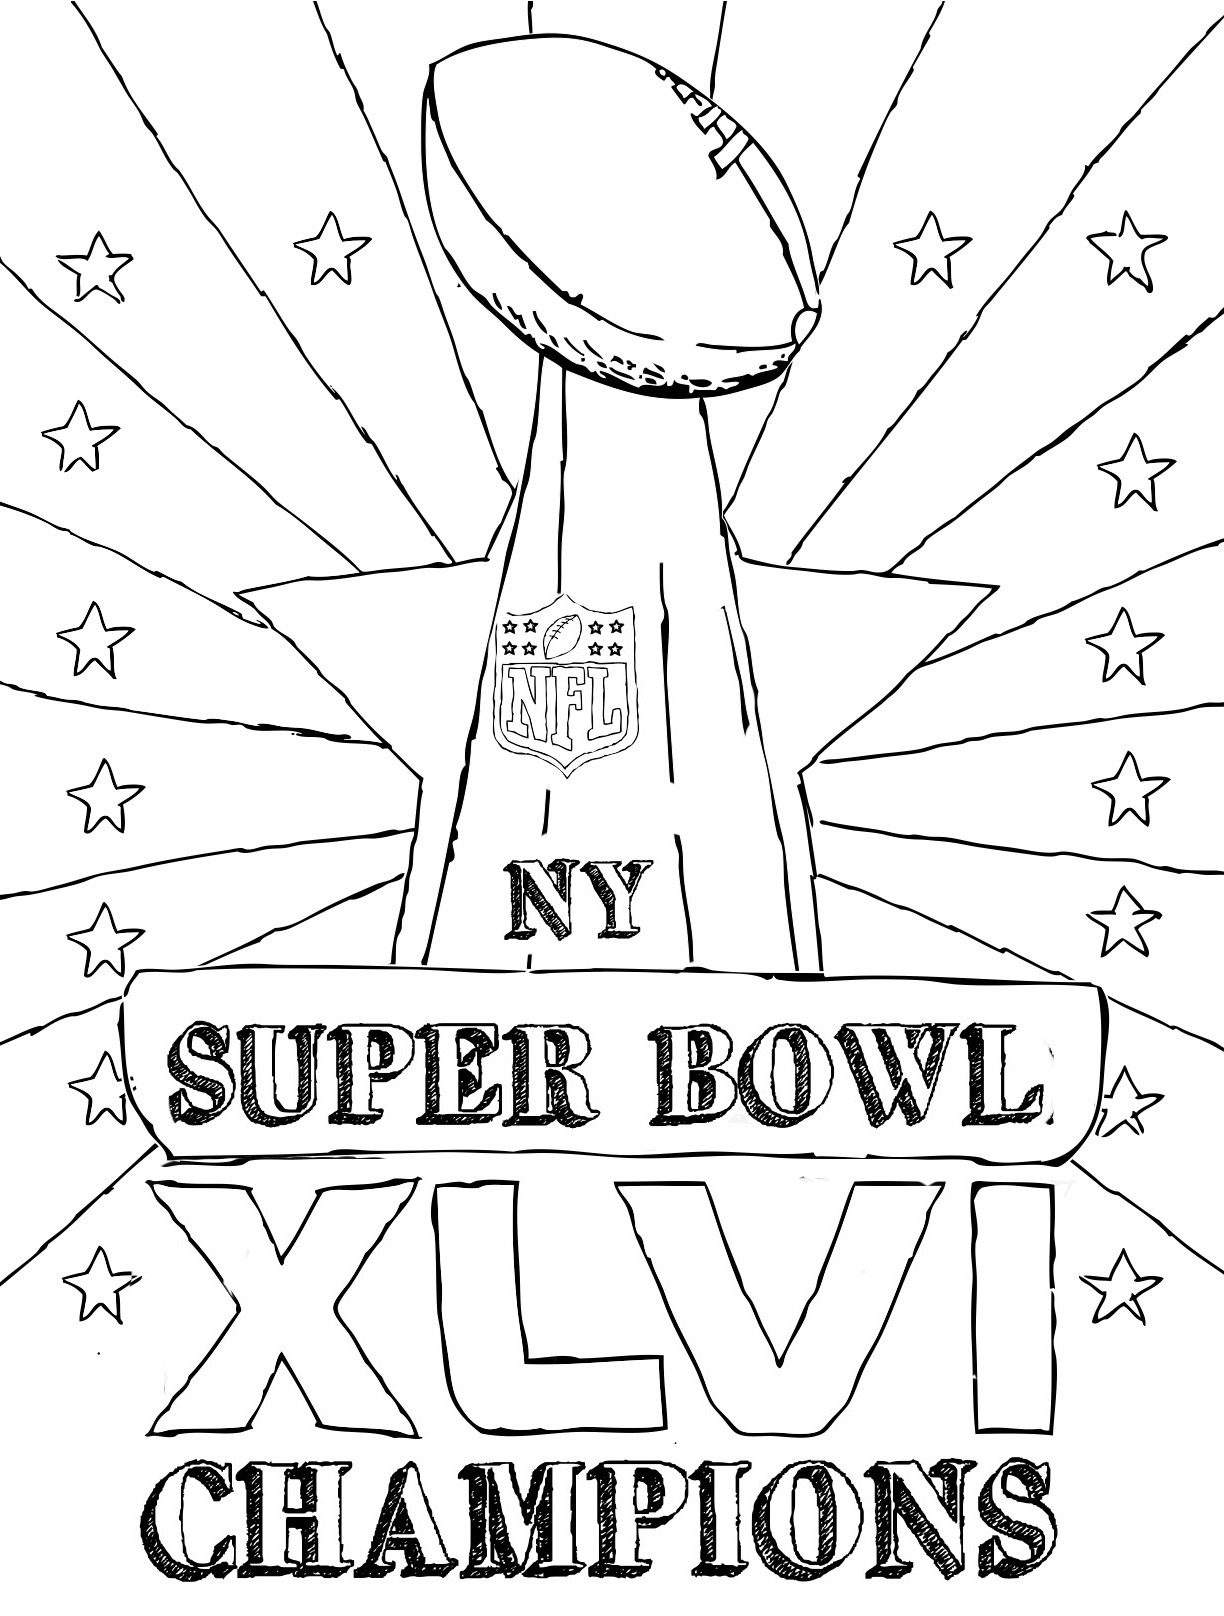 Super Bowl Trophy Coloring Pages - GetColoringPages.com